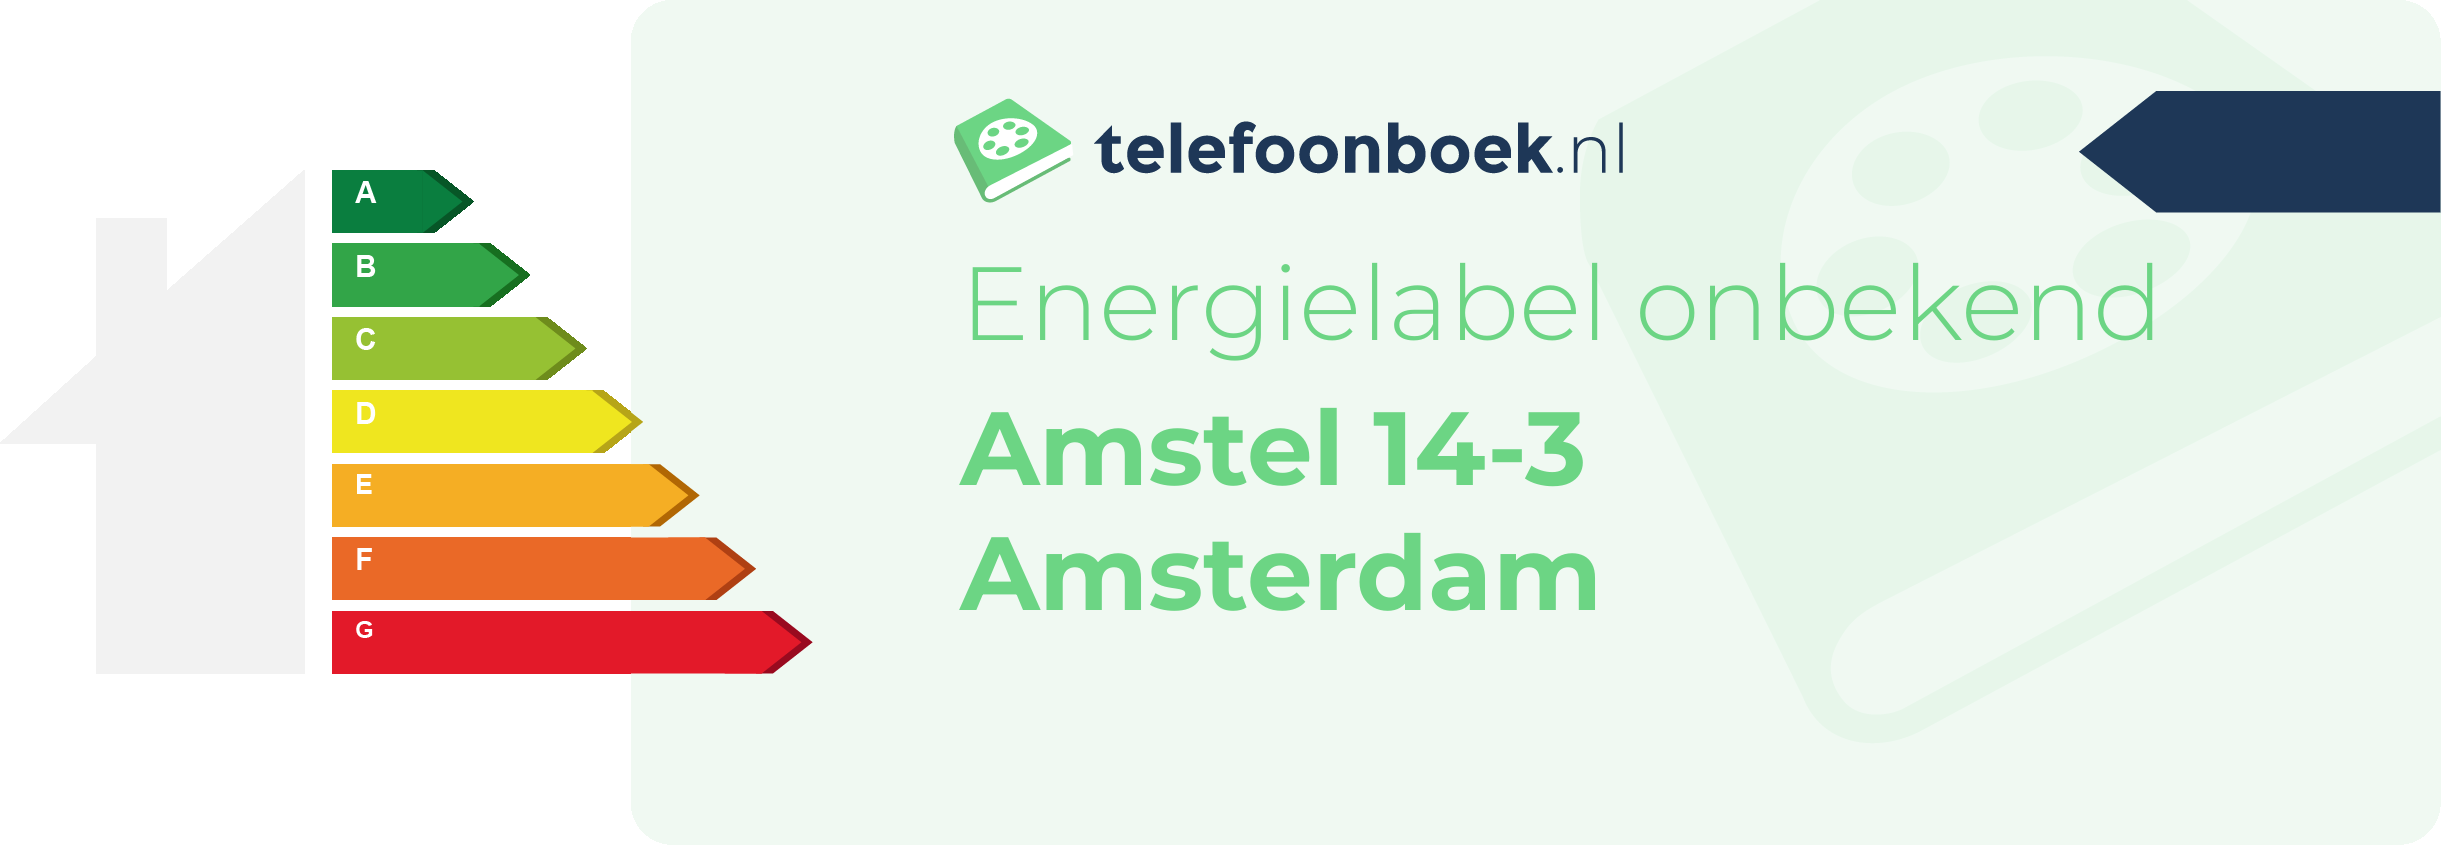 Energielabel Amstel 14-3 Amsterdam